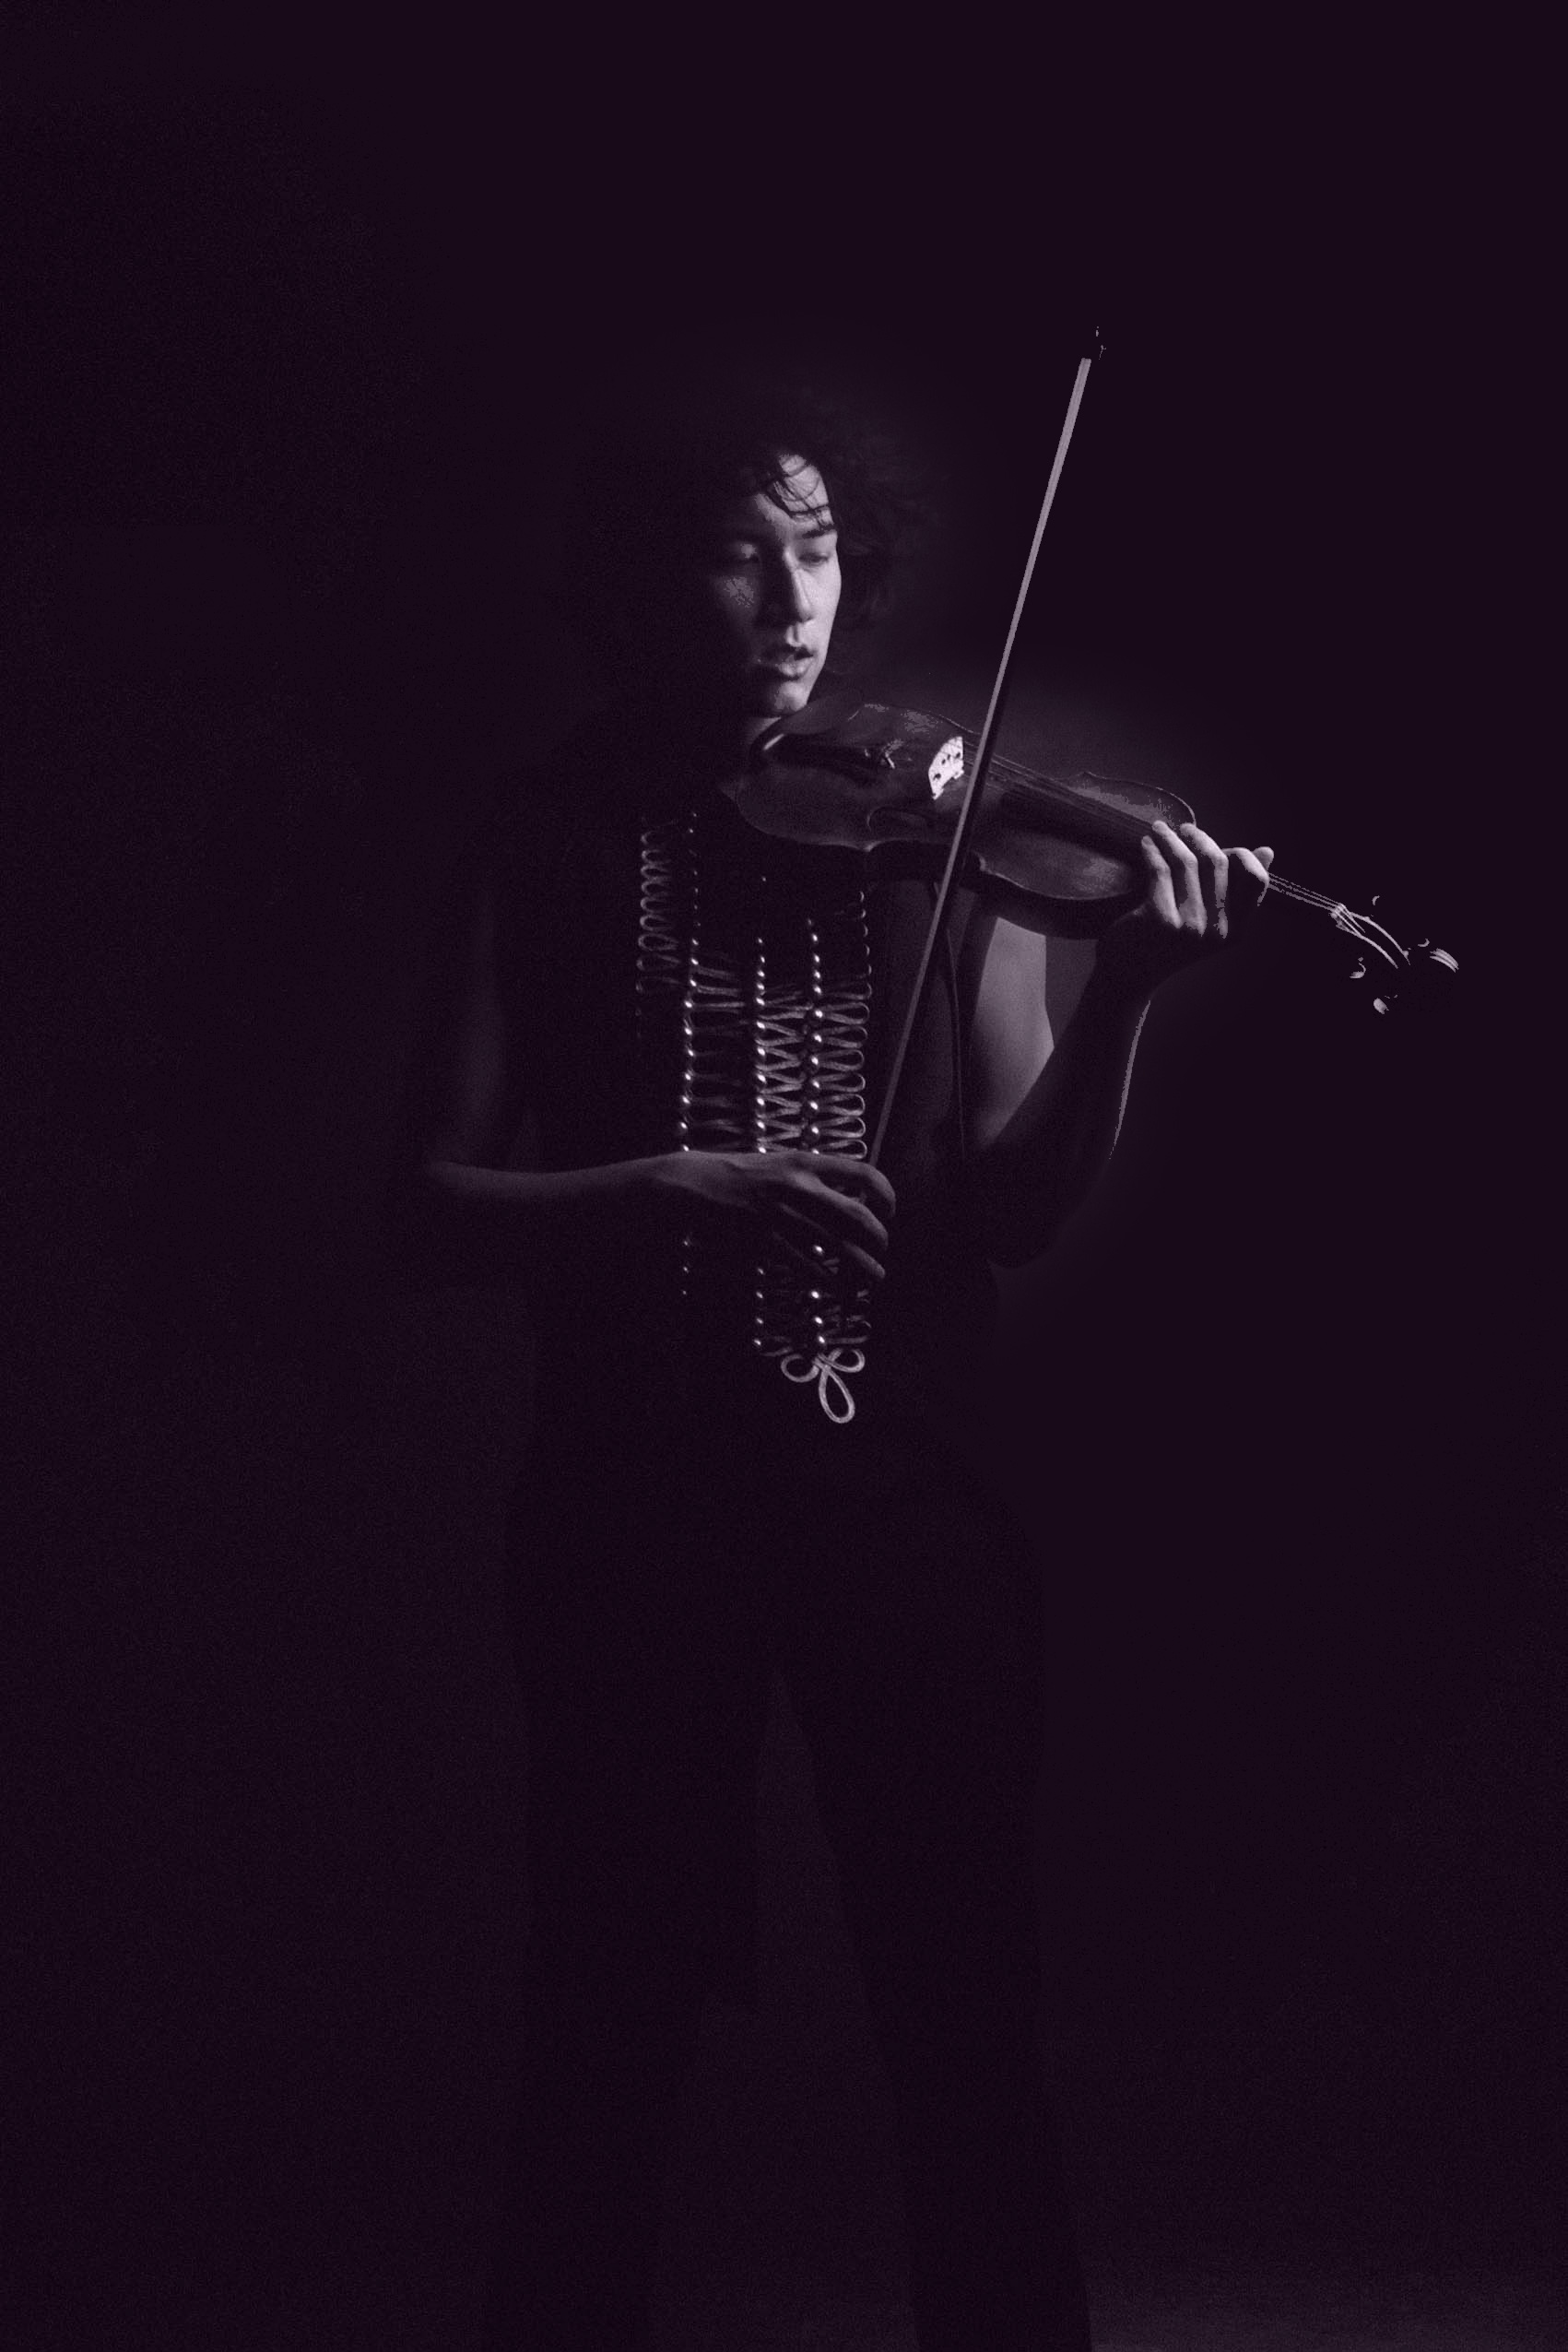 Iskandar playing the violine